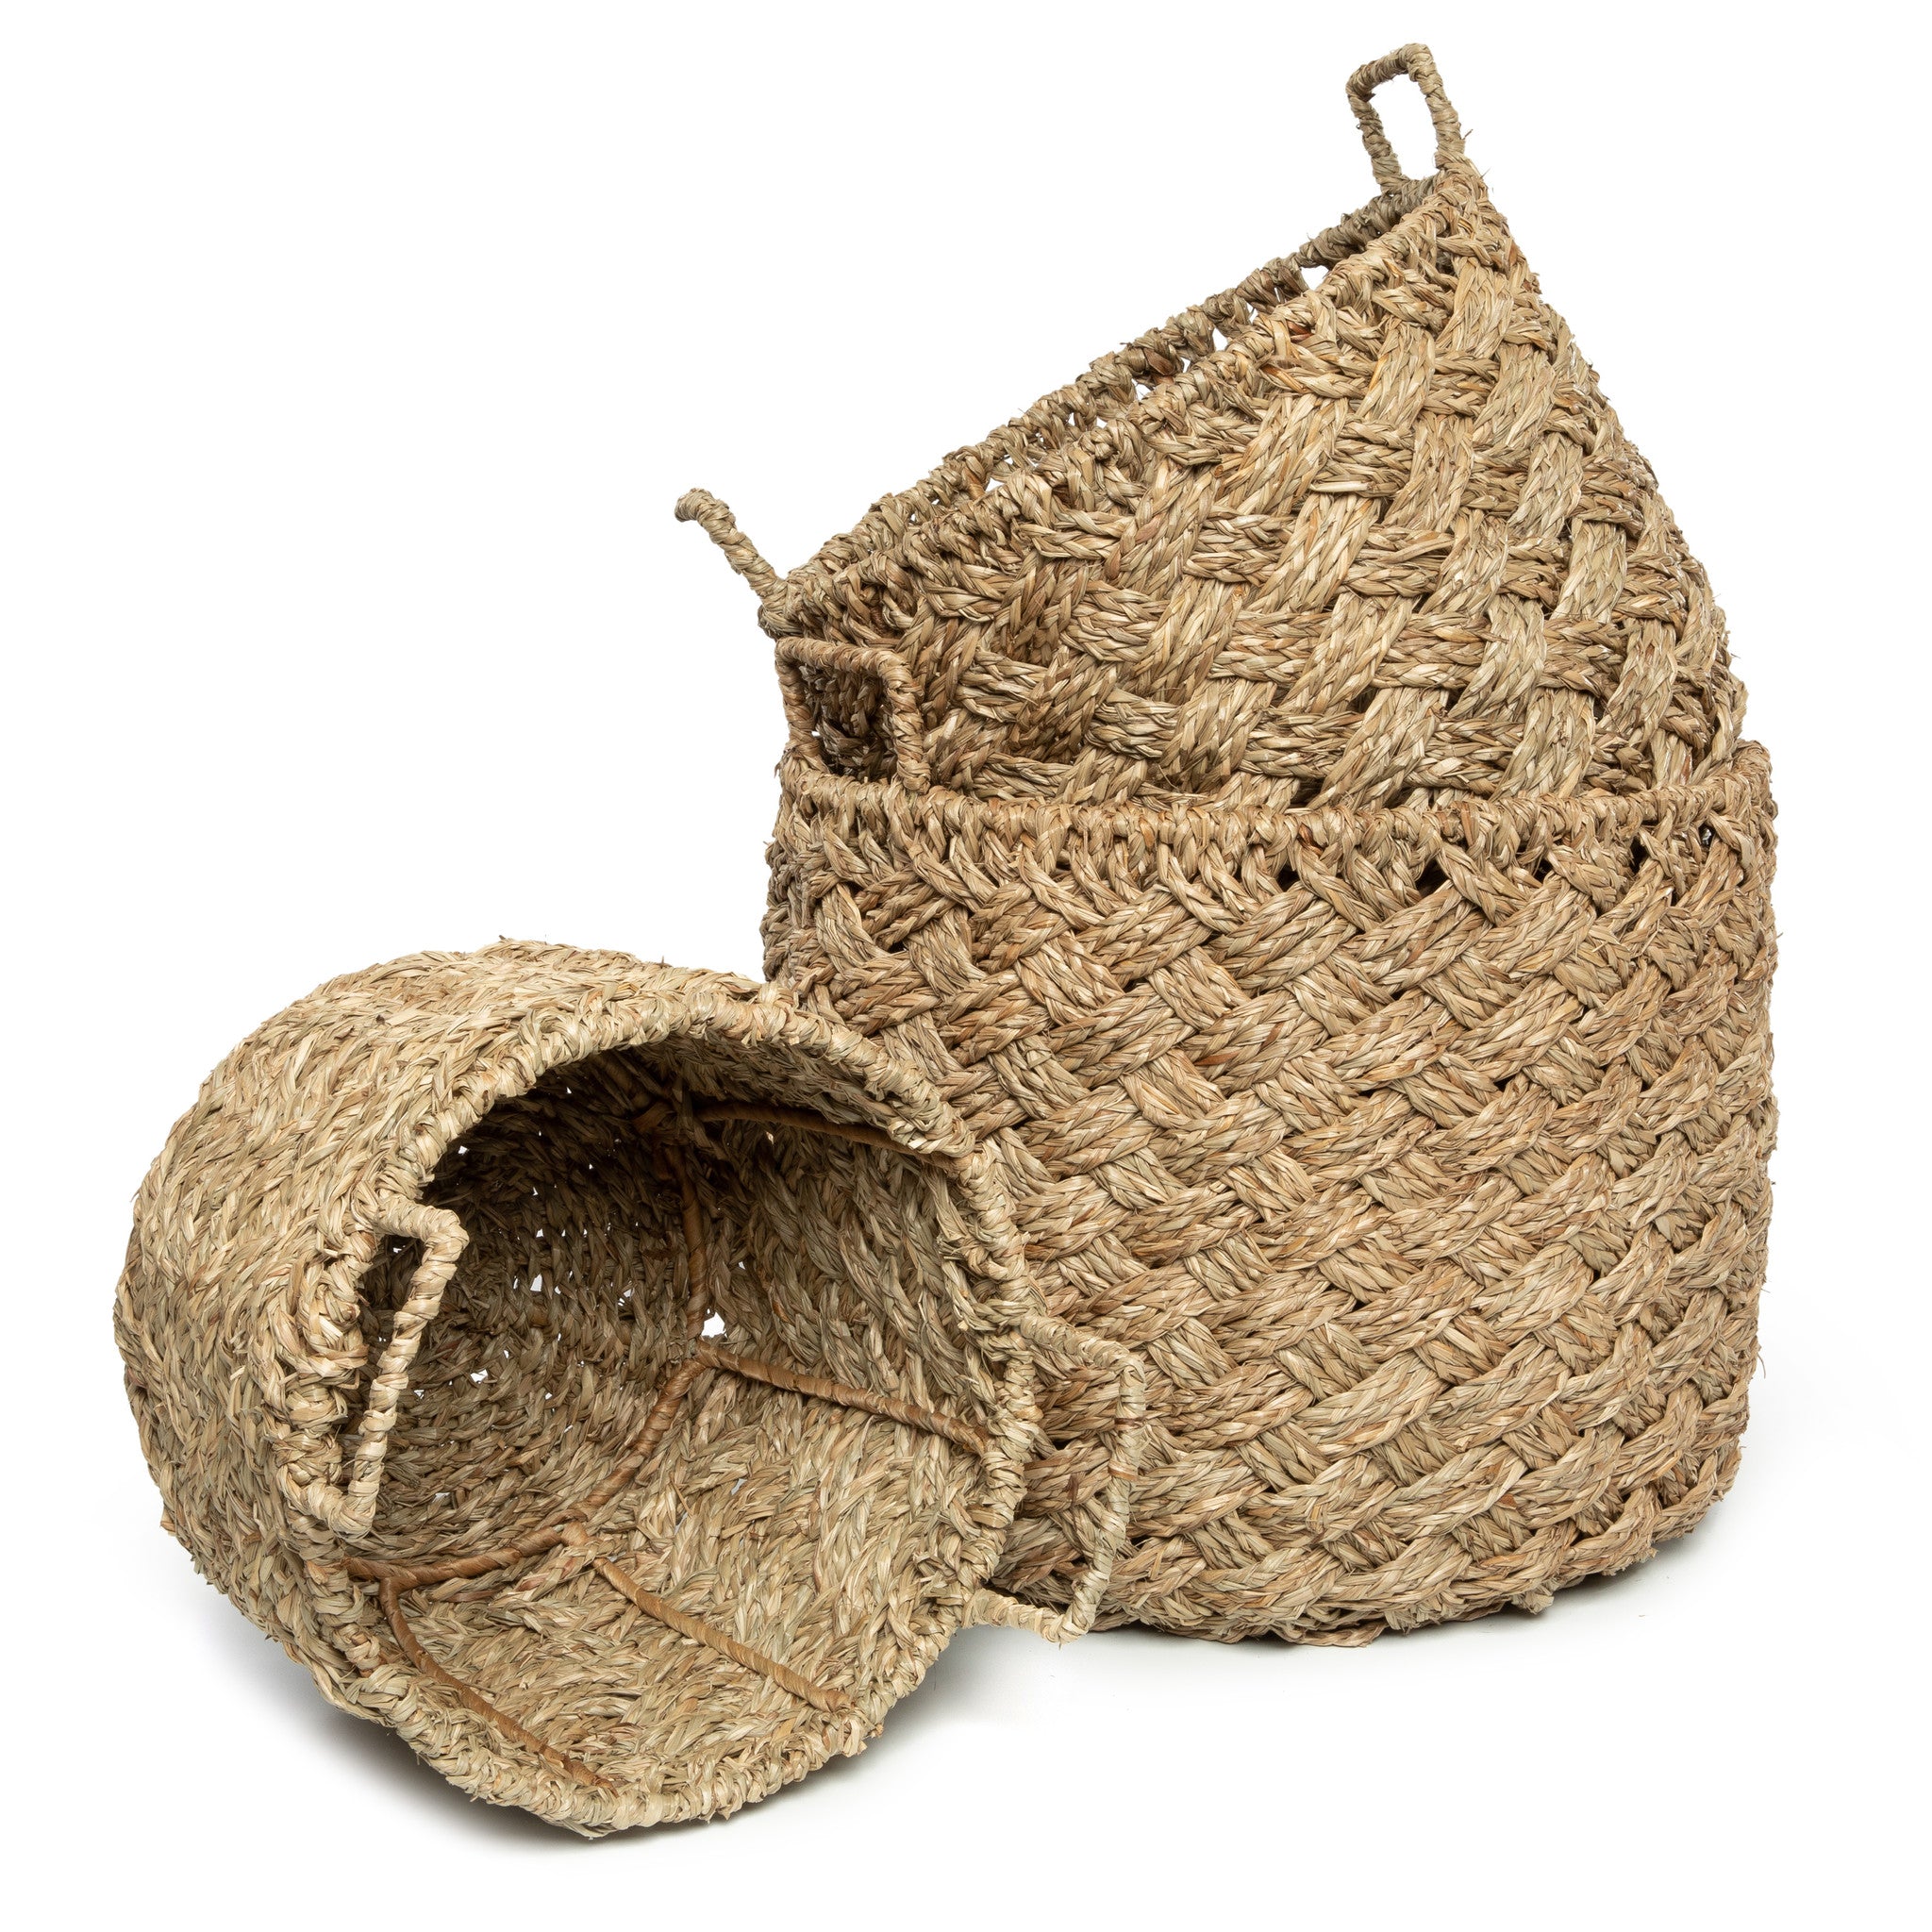 THE HOI AN Baskets Set of 3 half-folded